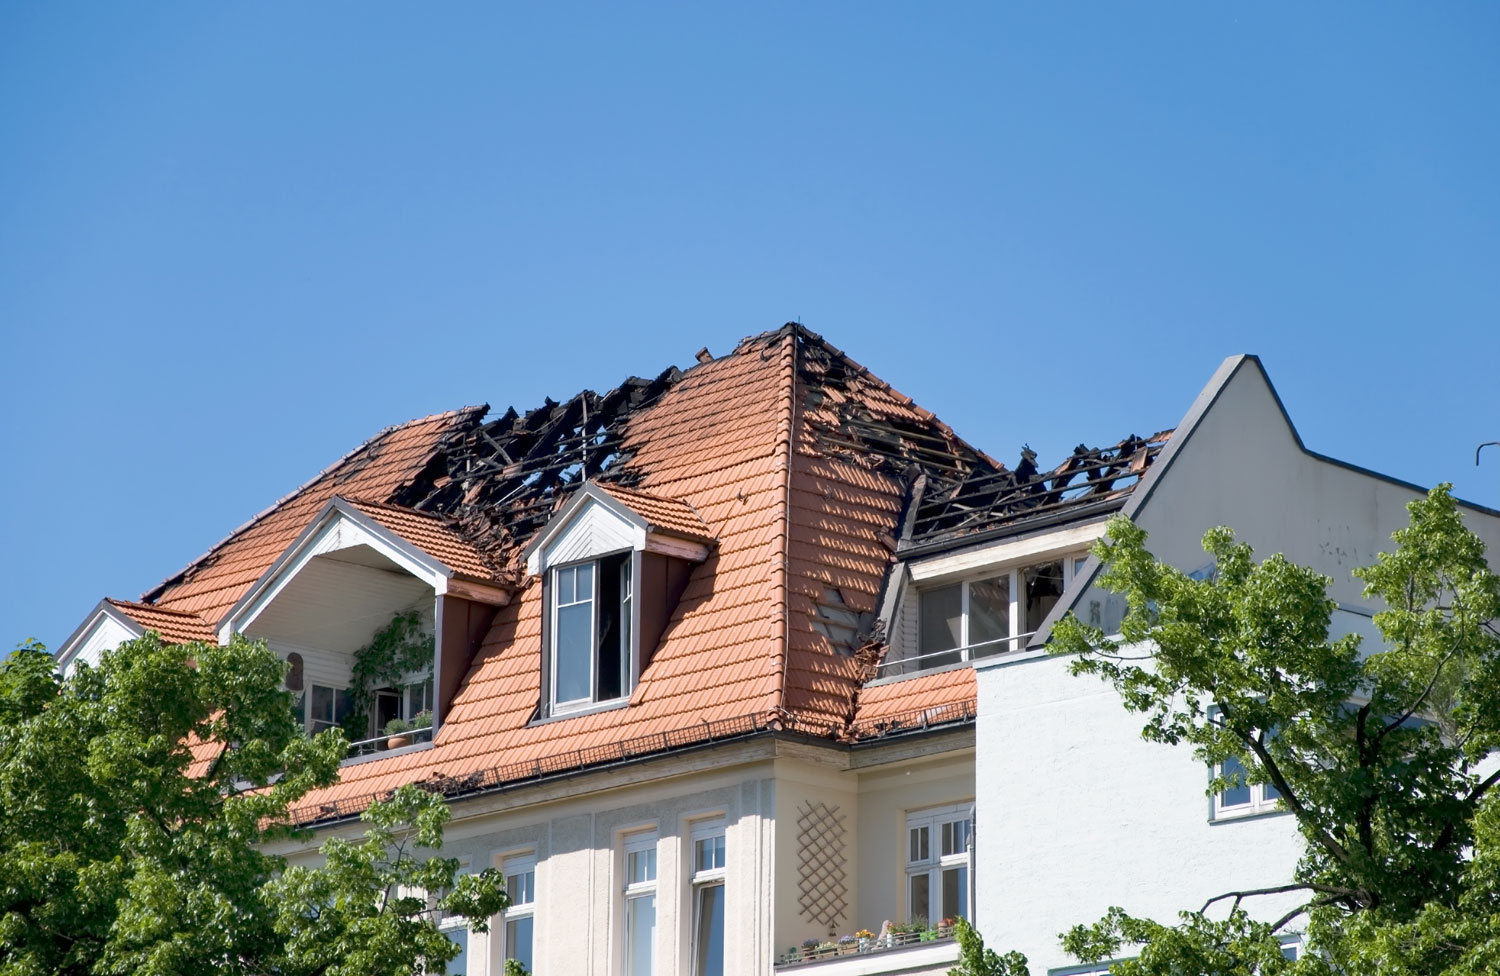 Fire Damage Restoration Costs